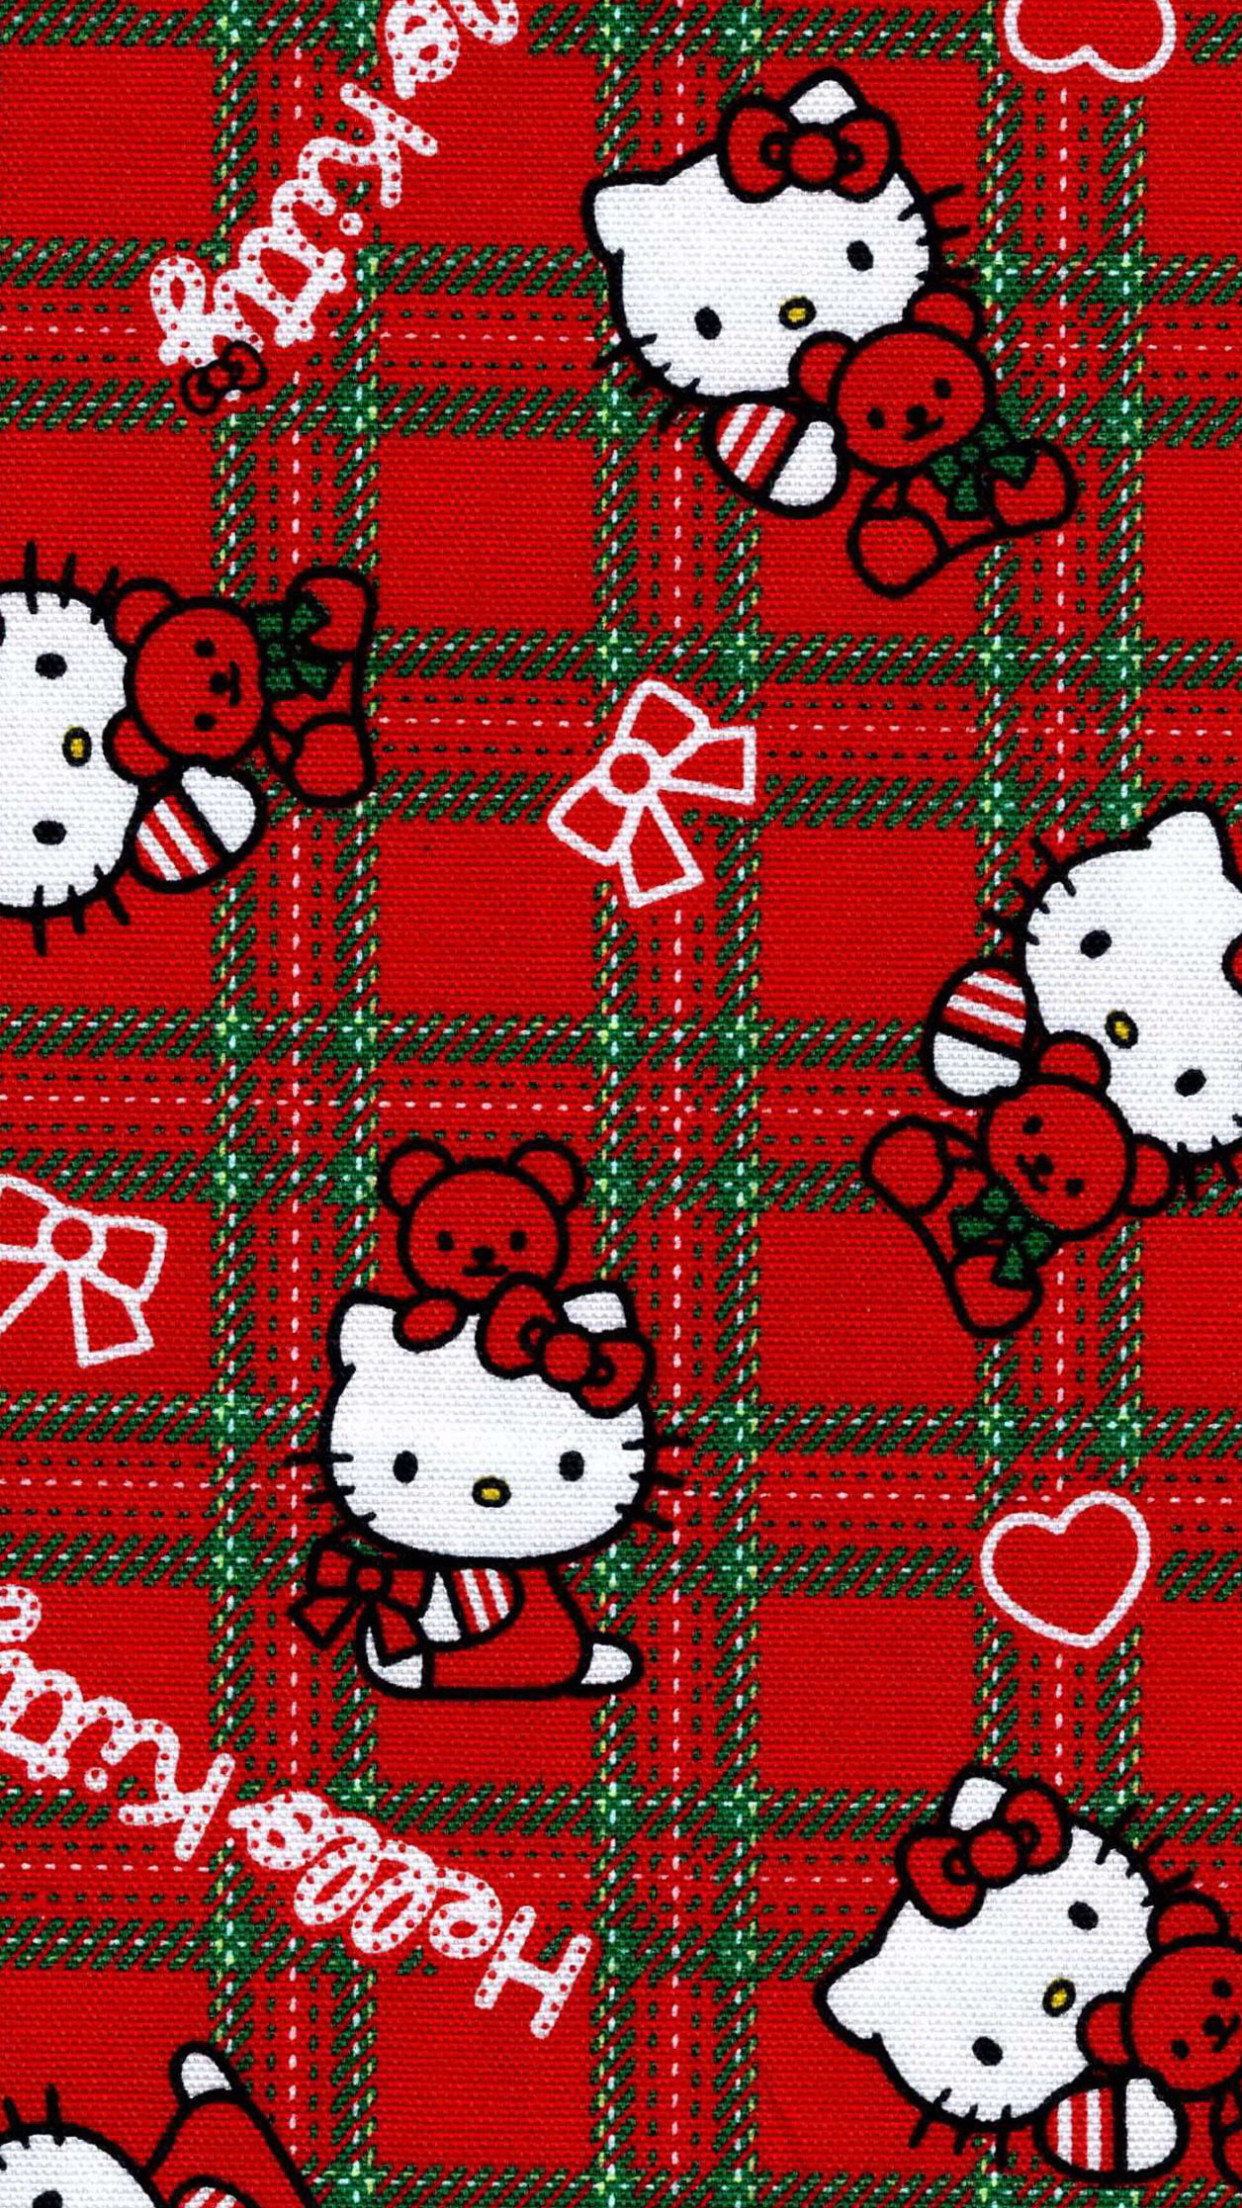 1242x2208  Hello Kitty Backgrounds, Hello Kitty Wallpaper, Phone Backgrounds,  Iphone Wallpapers, Hello Kitty Christmas, Hello Kitty Pictures, Red  Background, ...